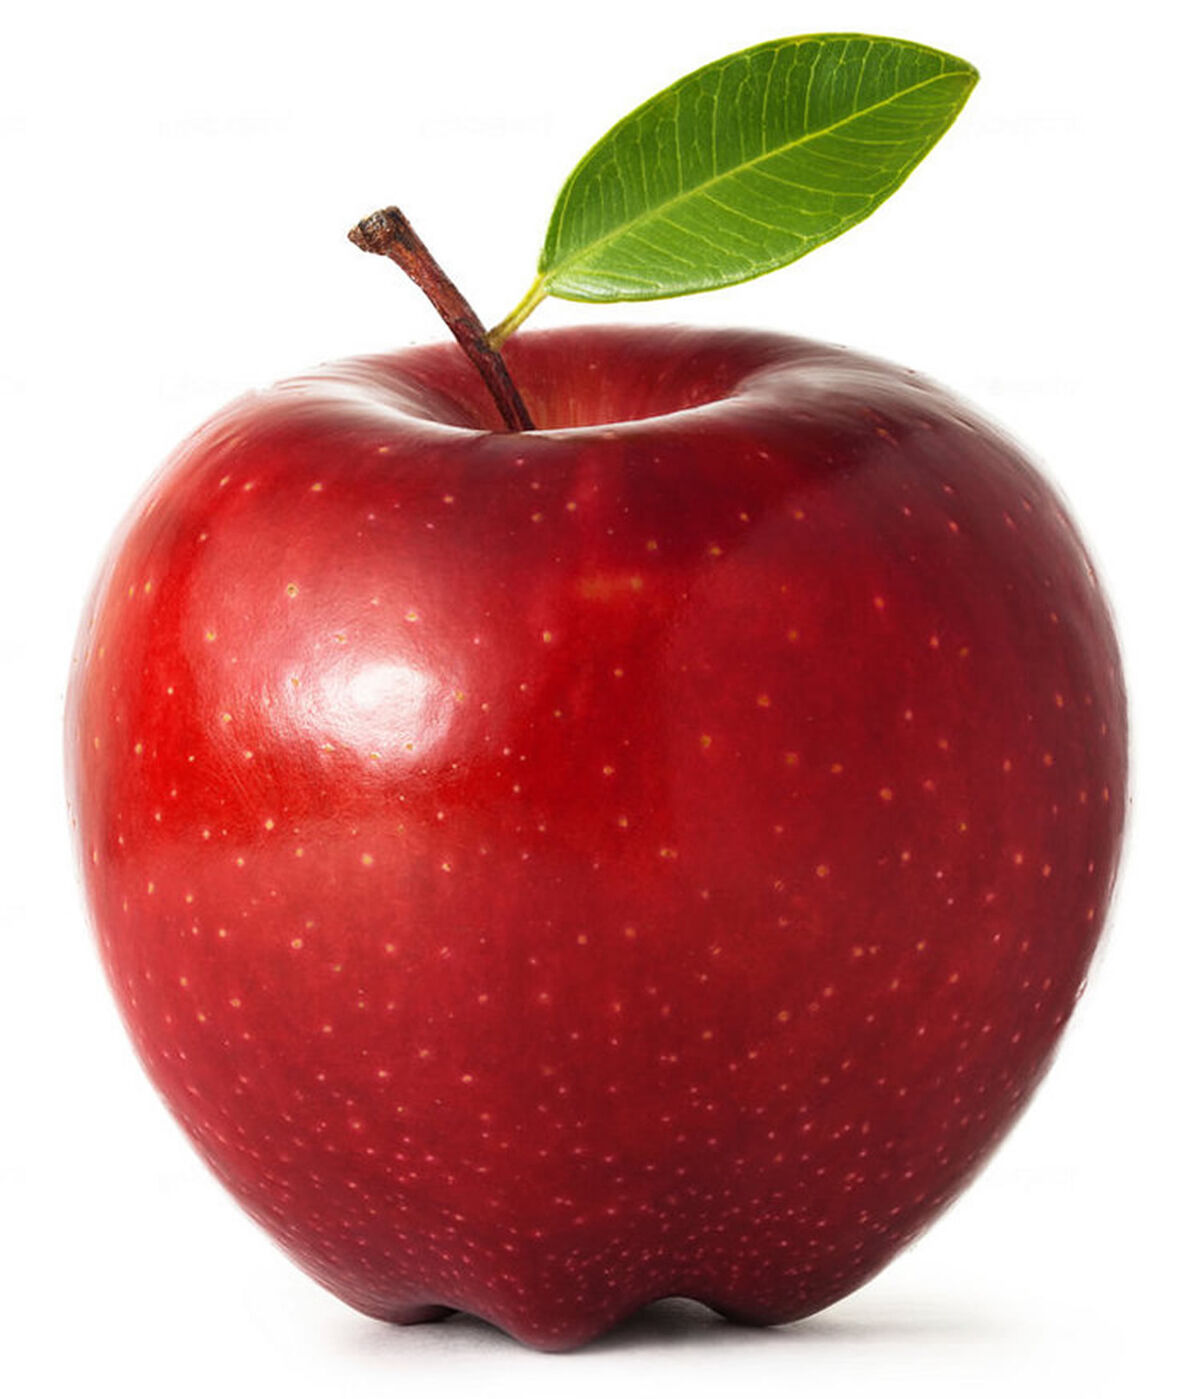 File:Red Apple.jpg - Wikipedia